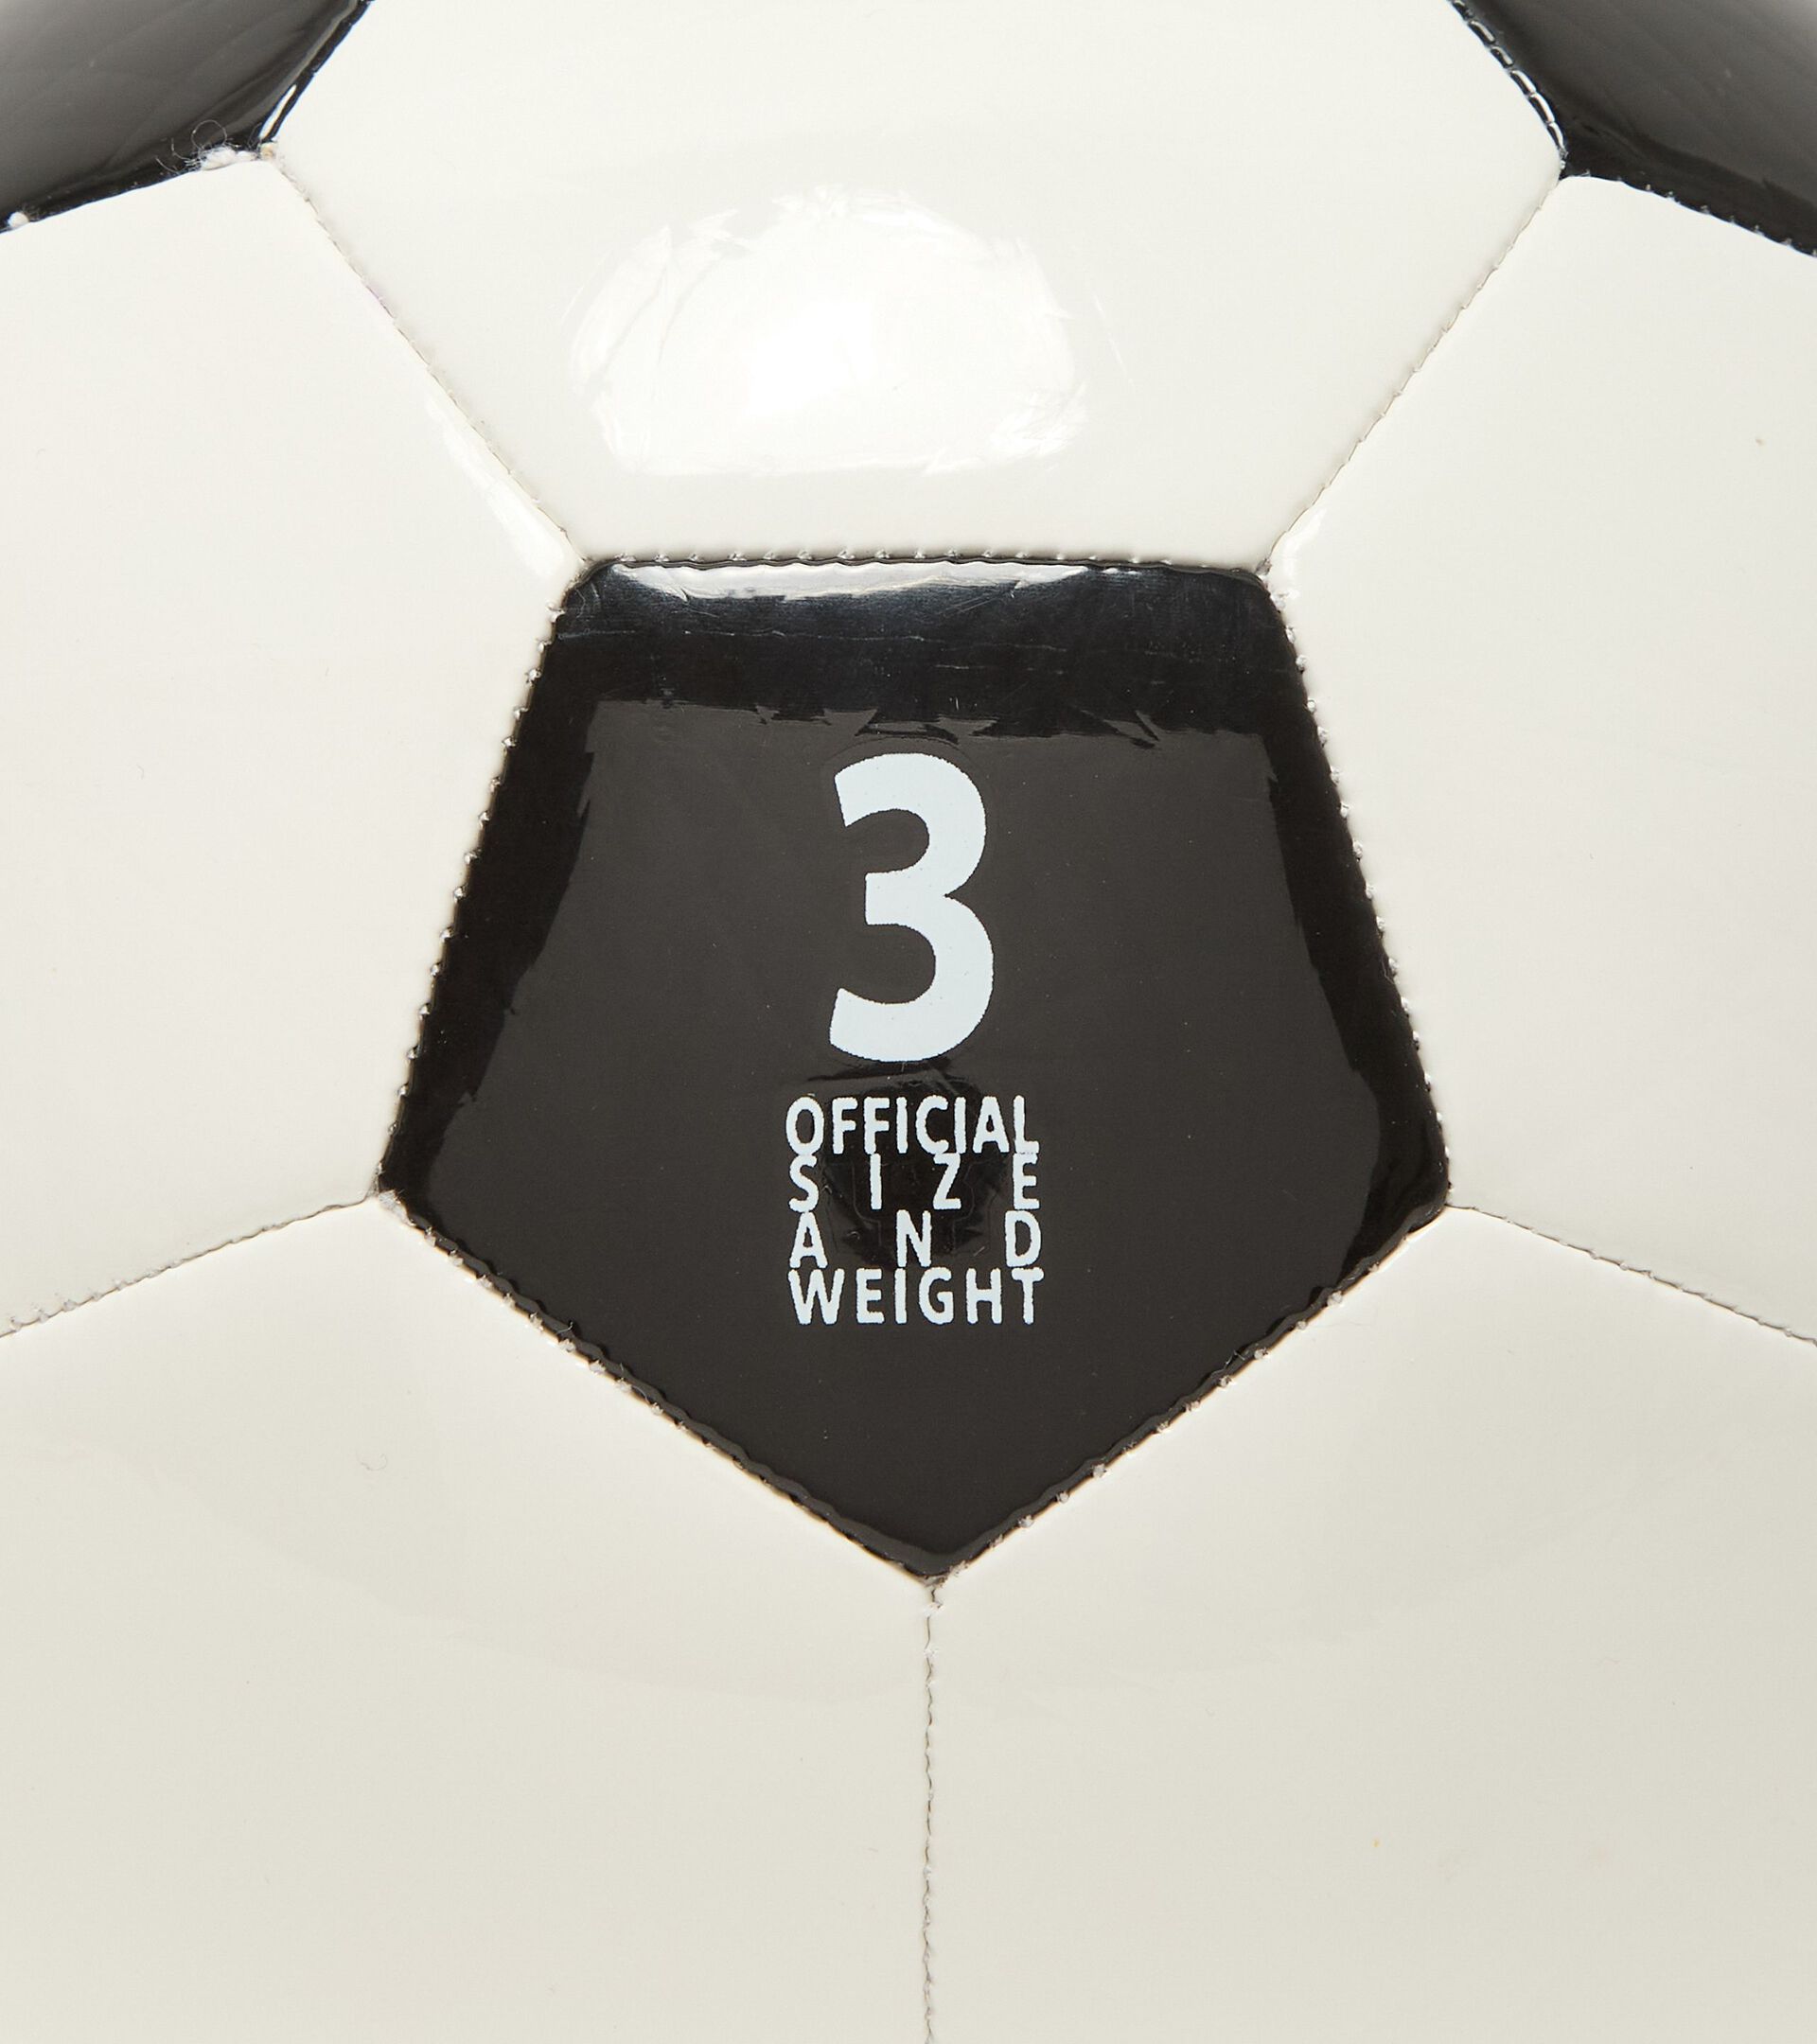 Soccer ball - size 3 SQUADRA 3 OPTICAL WHITE/BLACK - Diadora